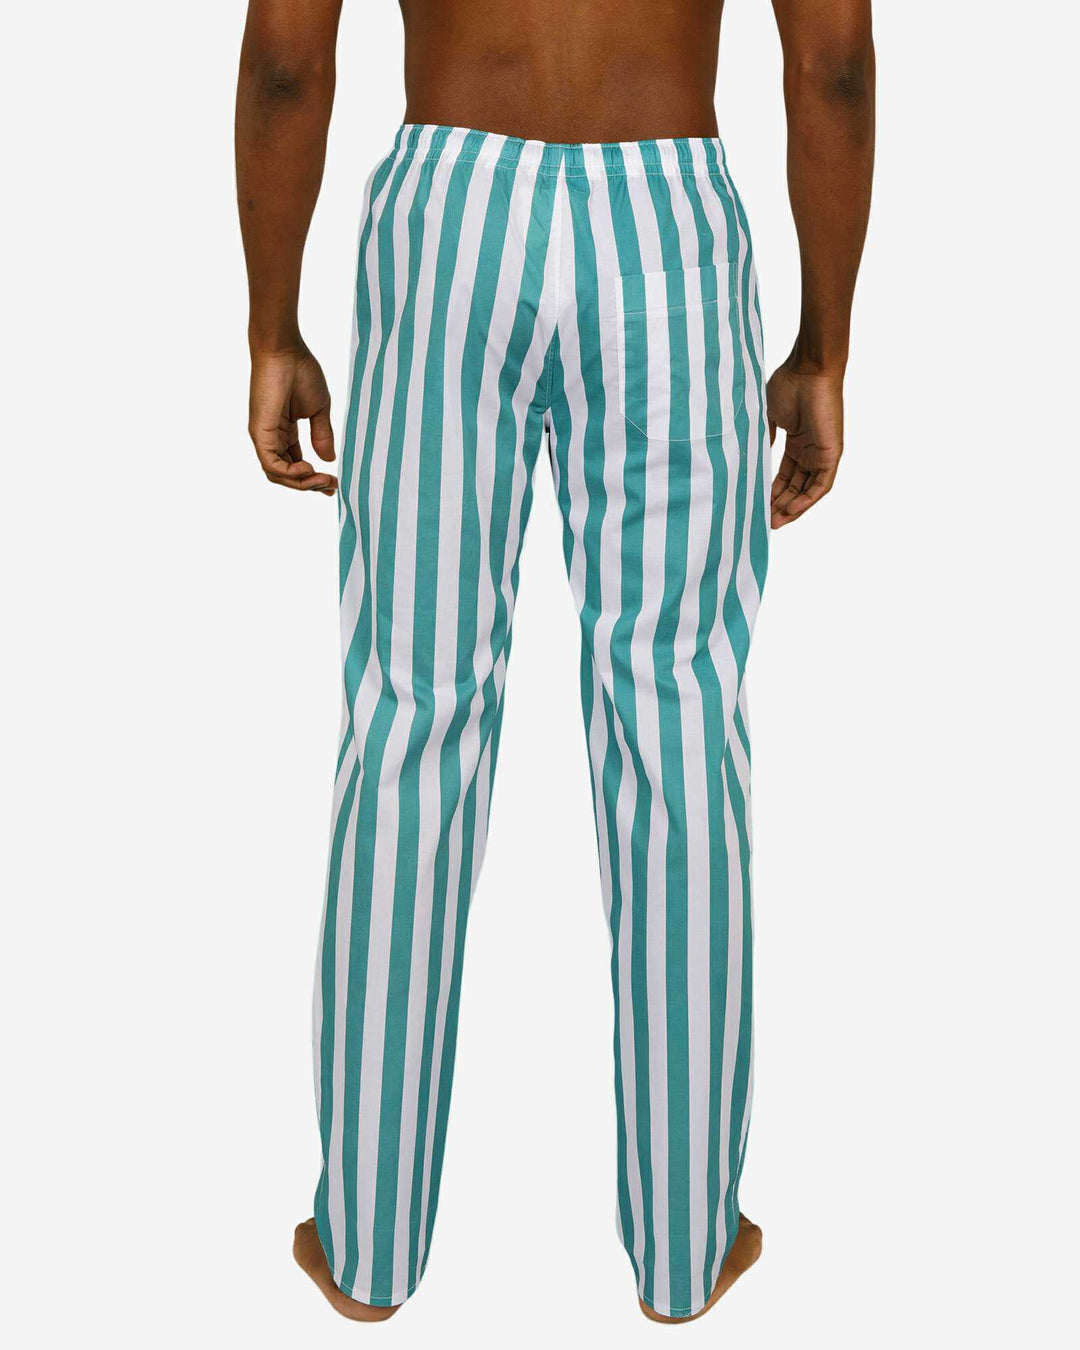 Men's Pyjama Bottoms - Woodstock Laundry